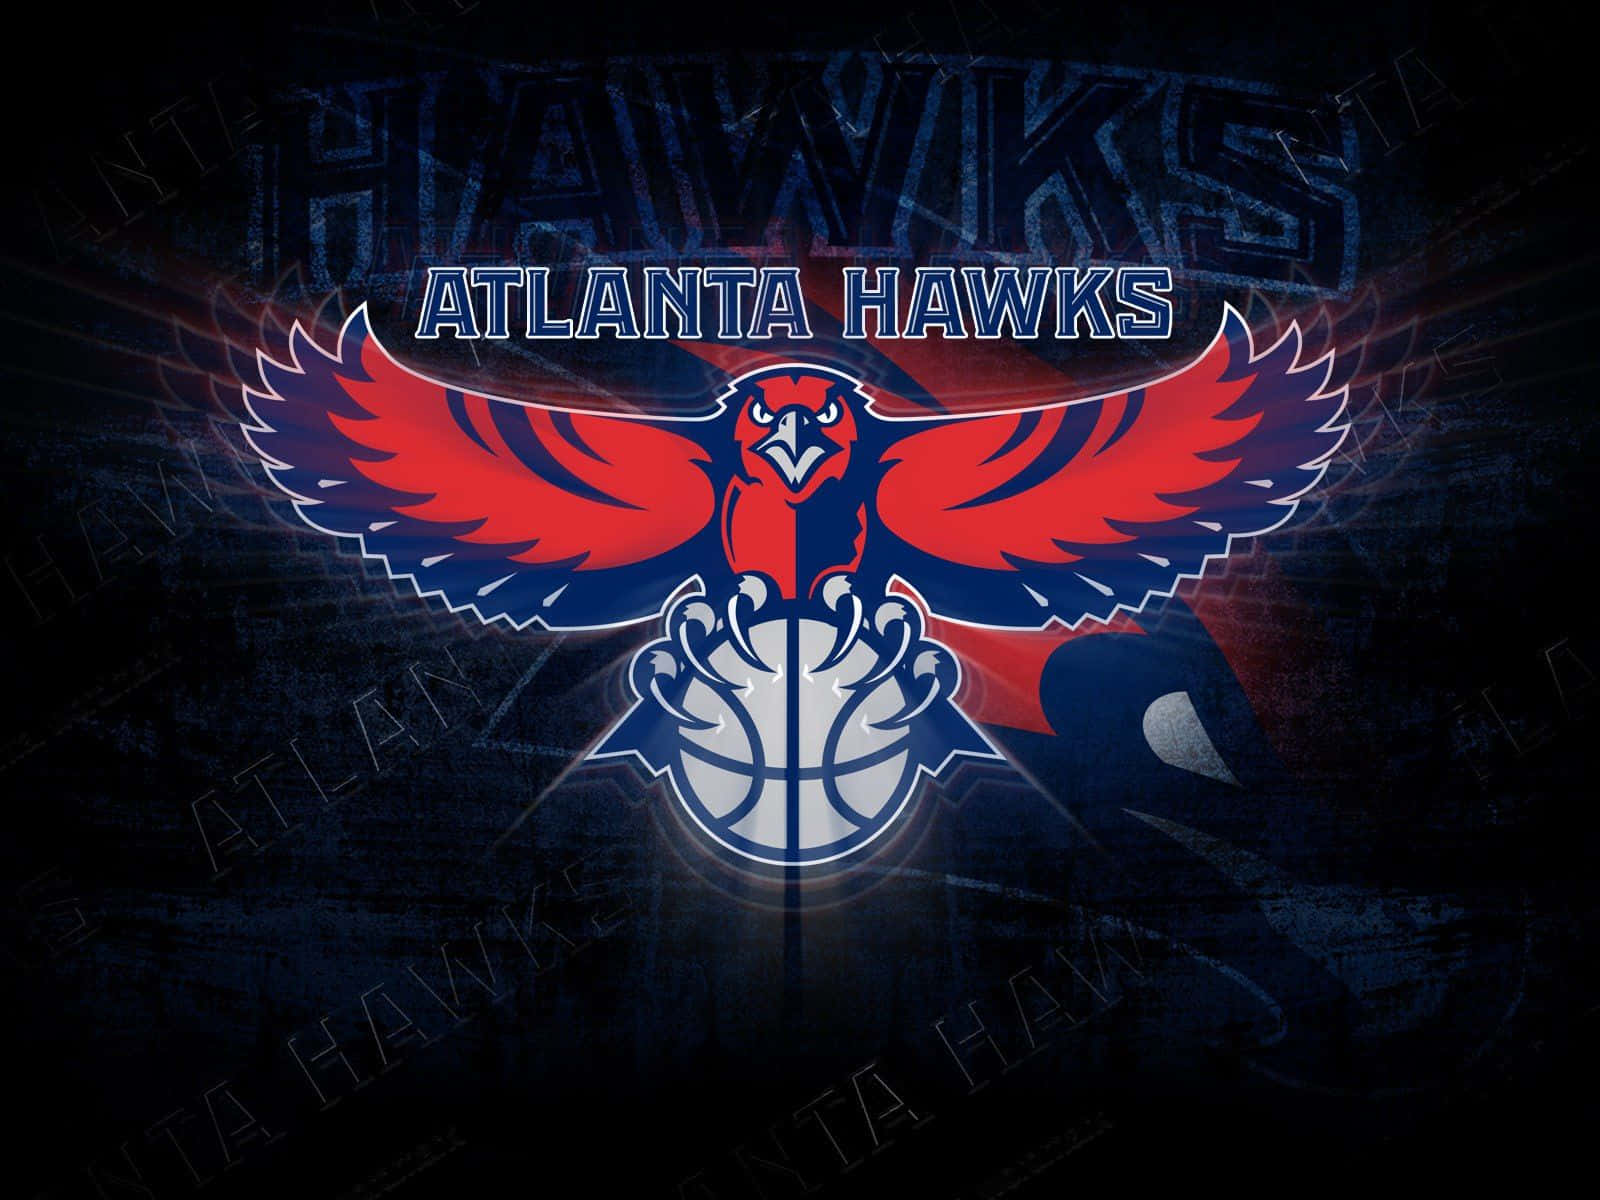 Atlanta Hawks soaring up from the court